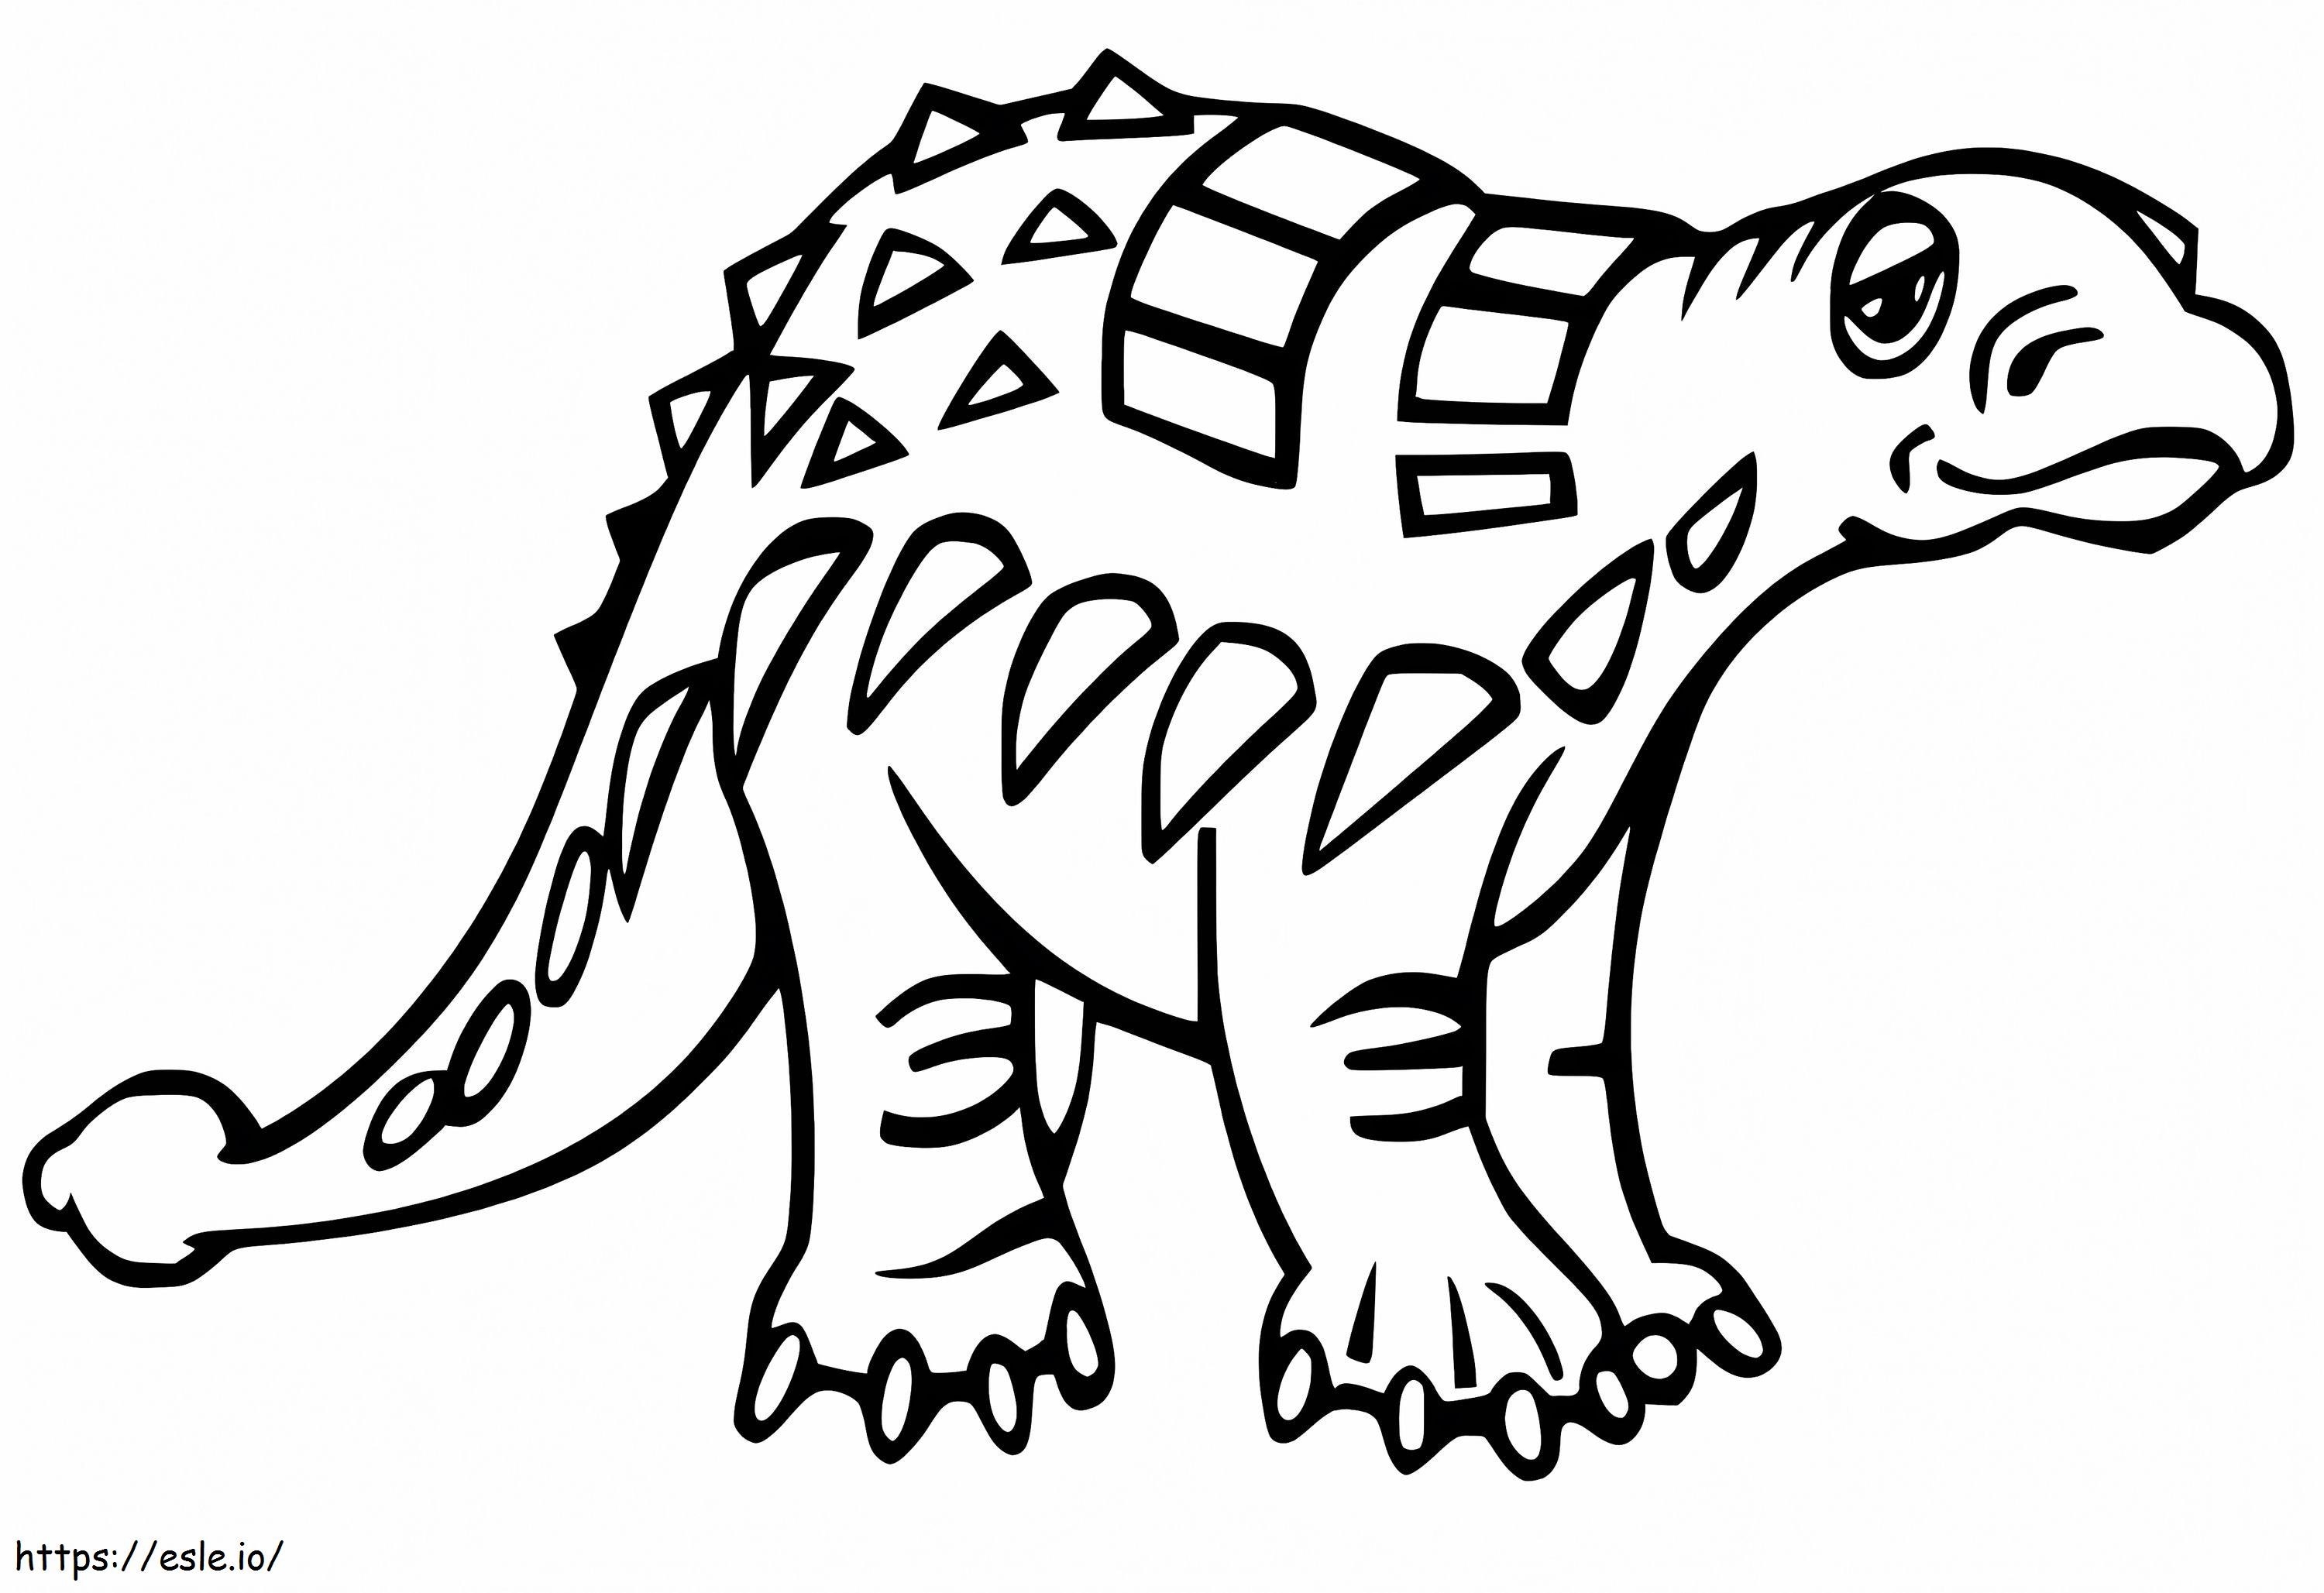 Sad Ankylosaurus coloring page